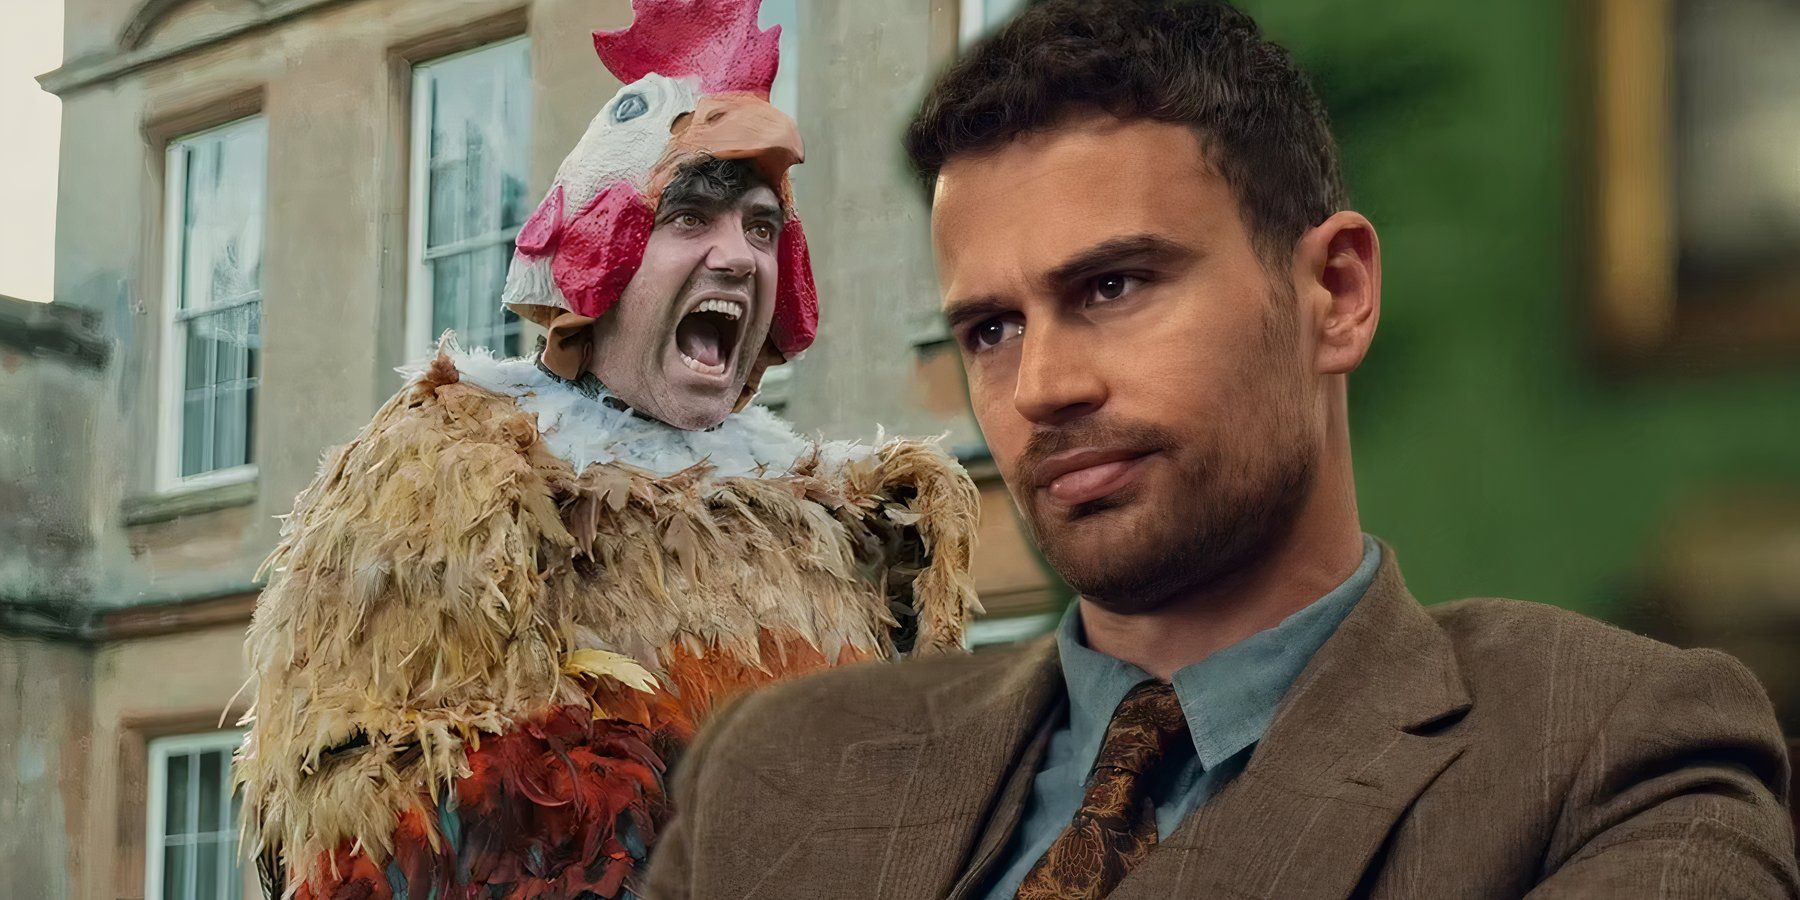 Freddie dressed as a chicken screaming and Eddie looking calm in The Gentlemen TV show